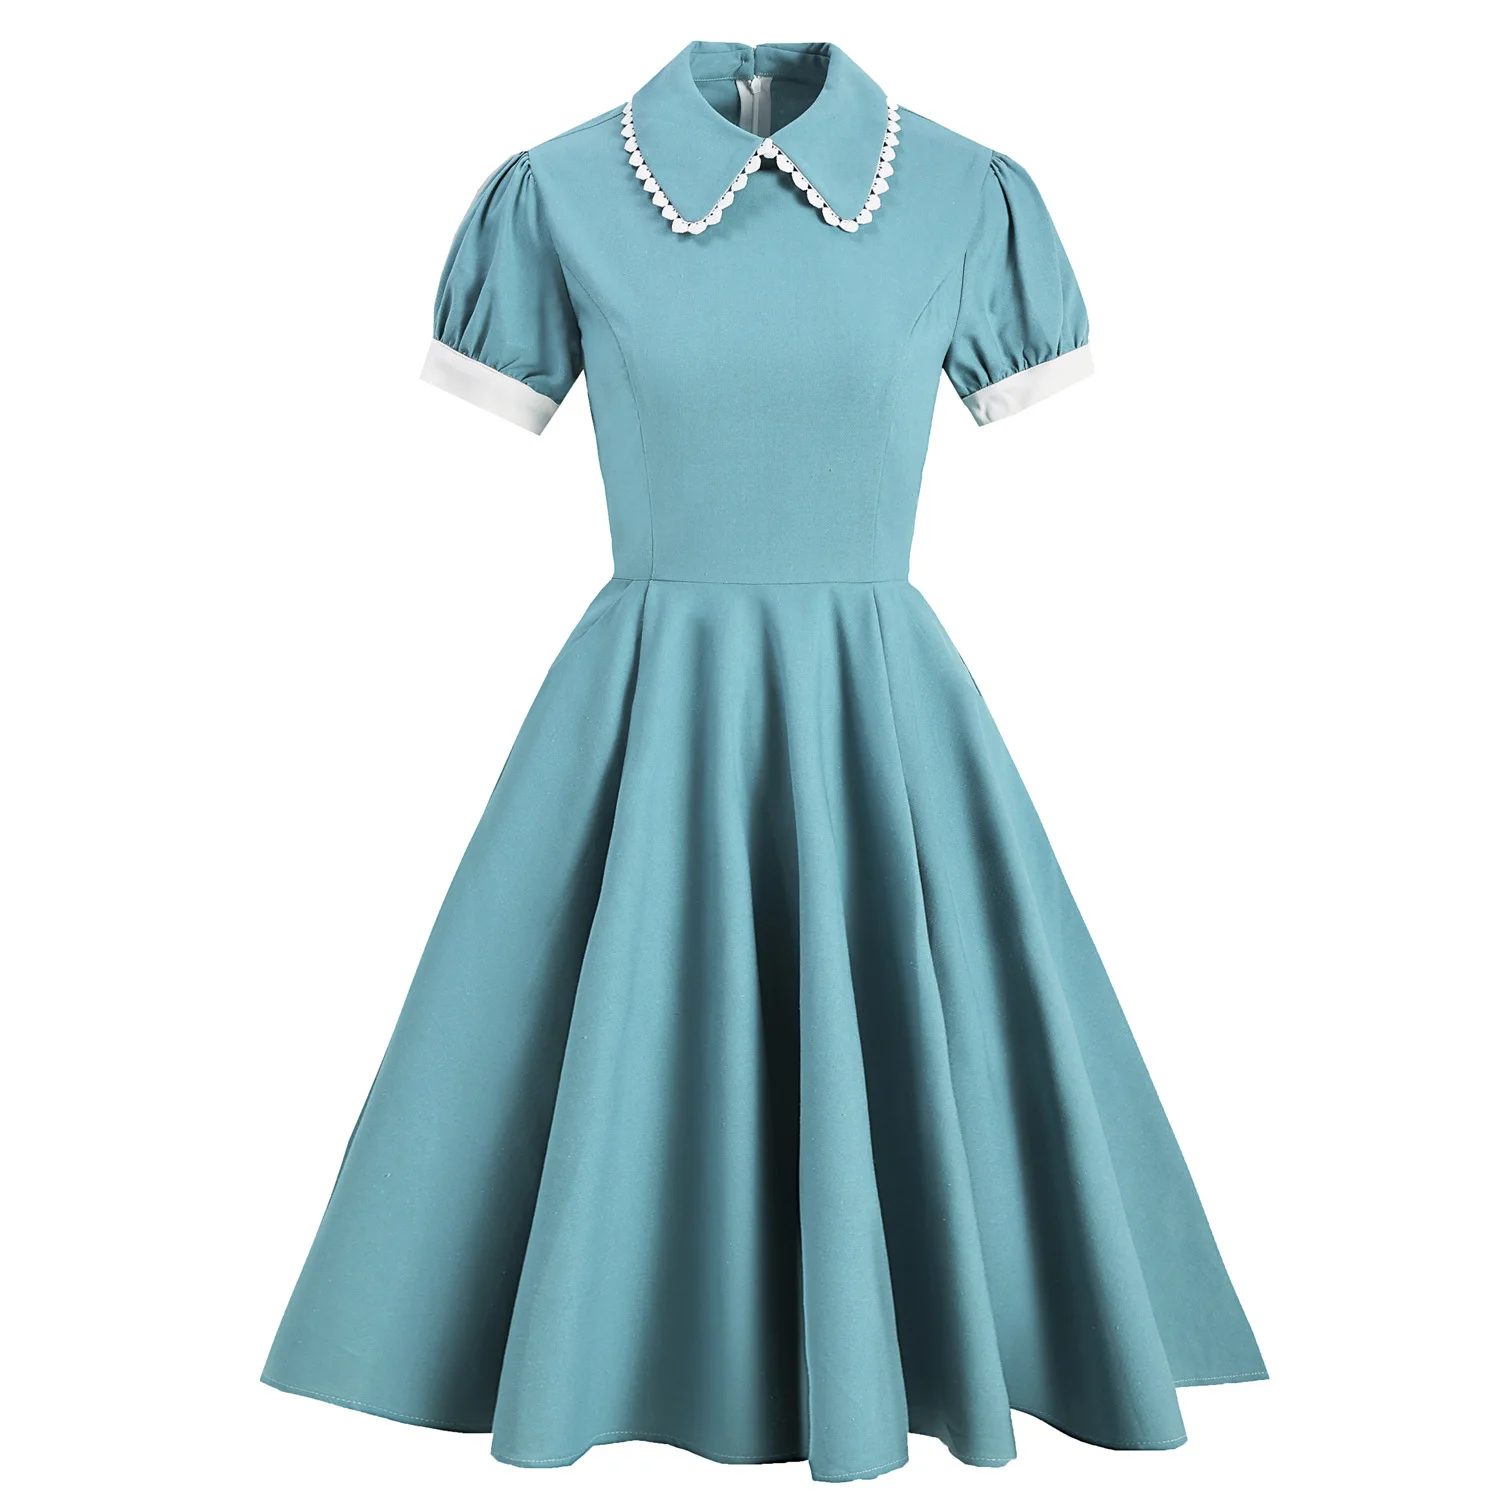 Solid Blue Vintage Swing Dress With Pocket Women Summer Retro 40s 50s 60s Pin Up Rockabilly Party Midi Dress Robe Vestidos